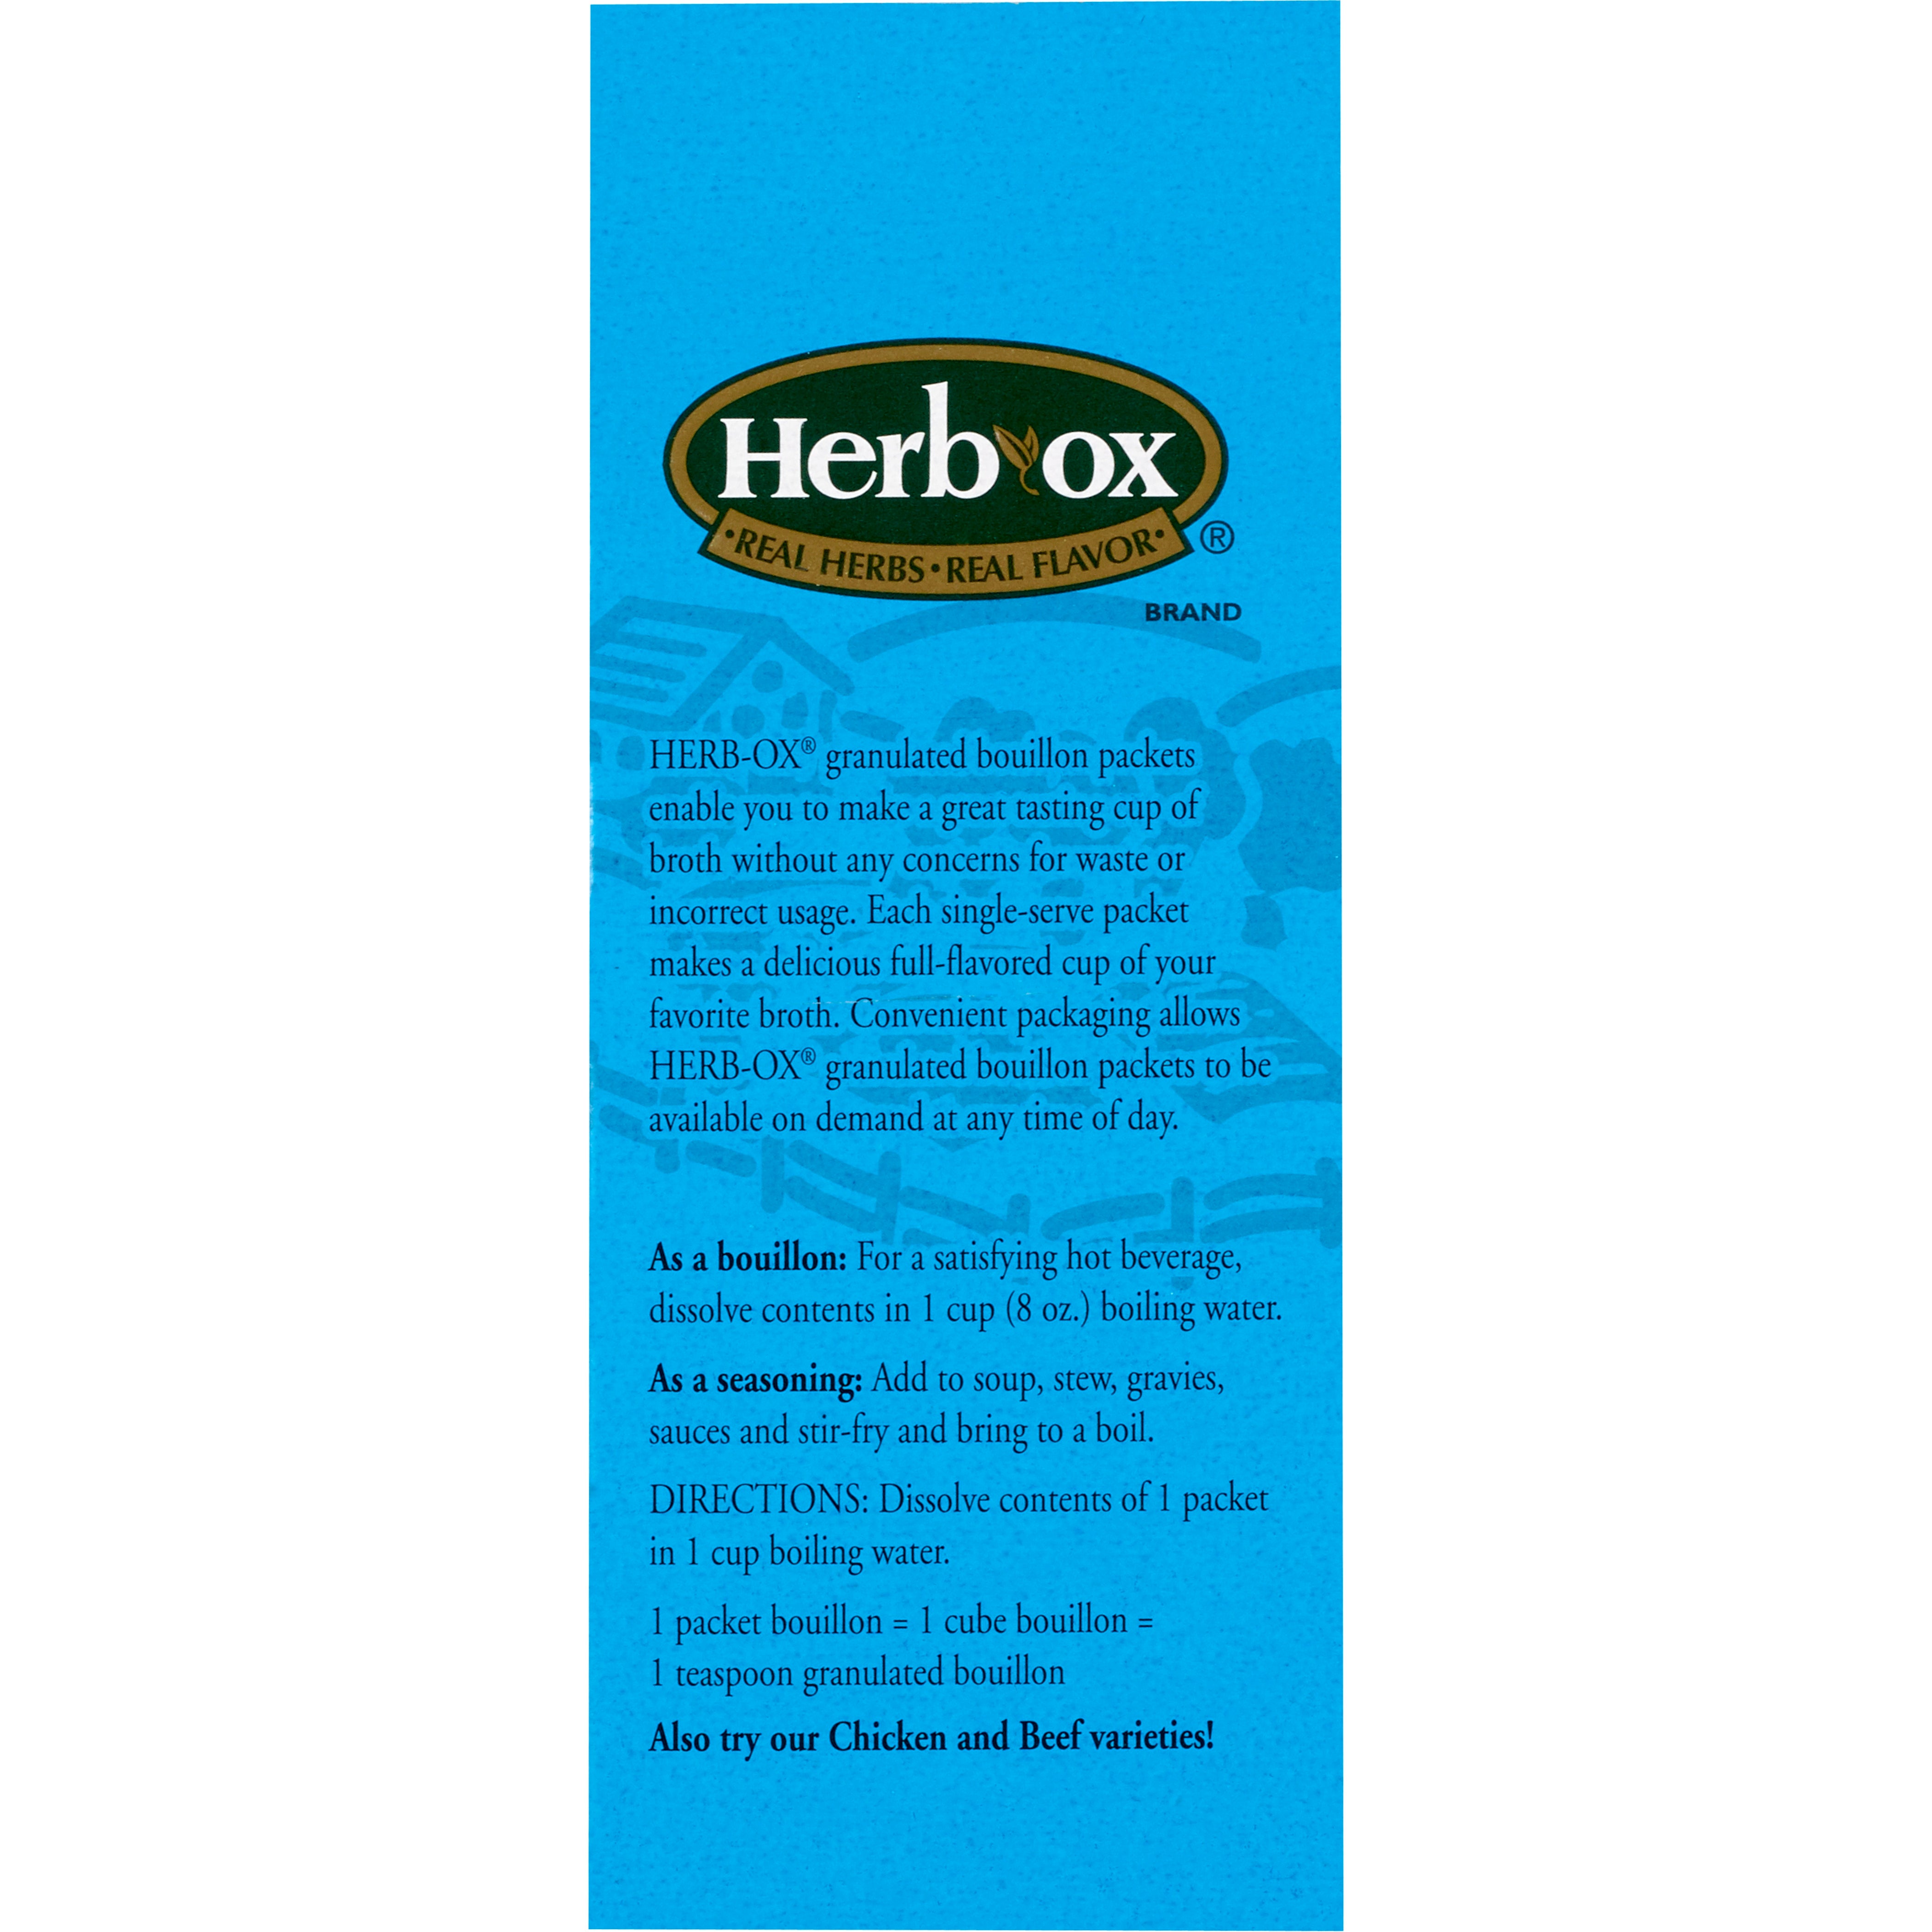 Instant Broth Herb-Ox Vegetable Flavor Liquid 7.5 oz. Individual Packet